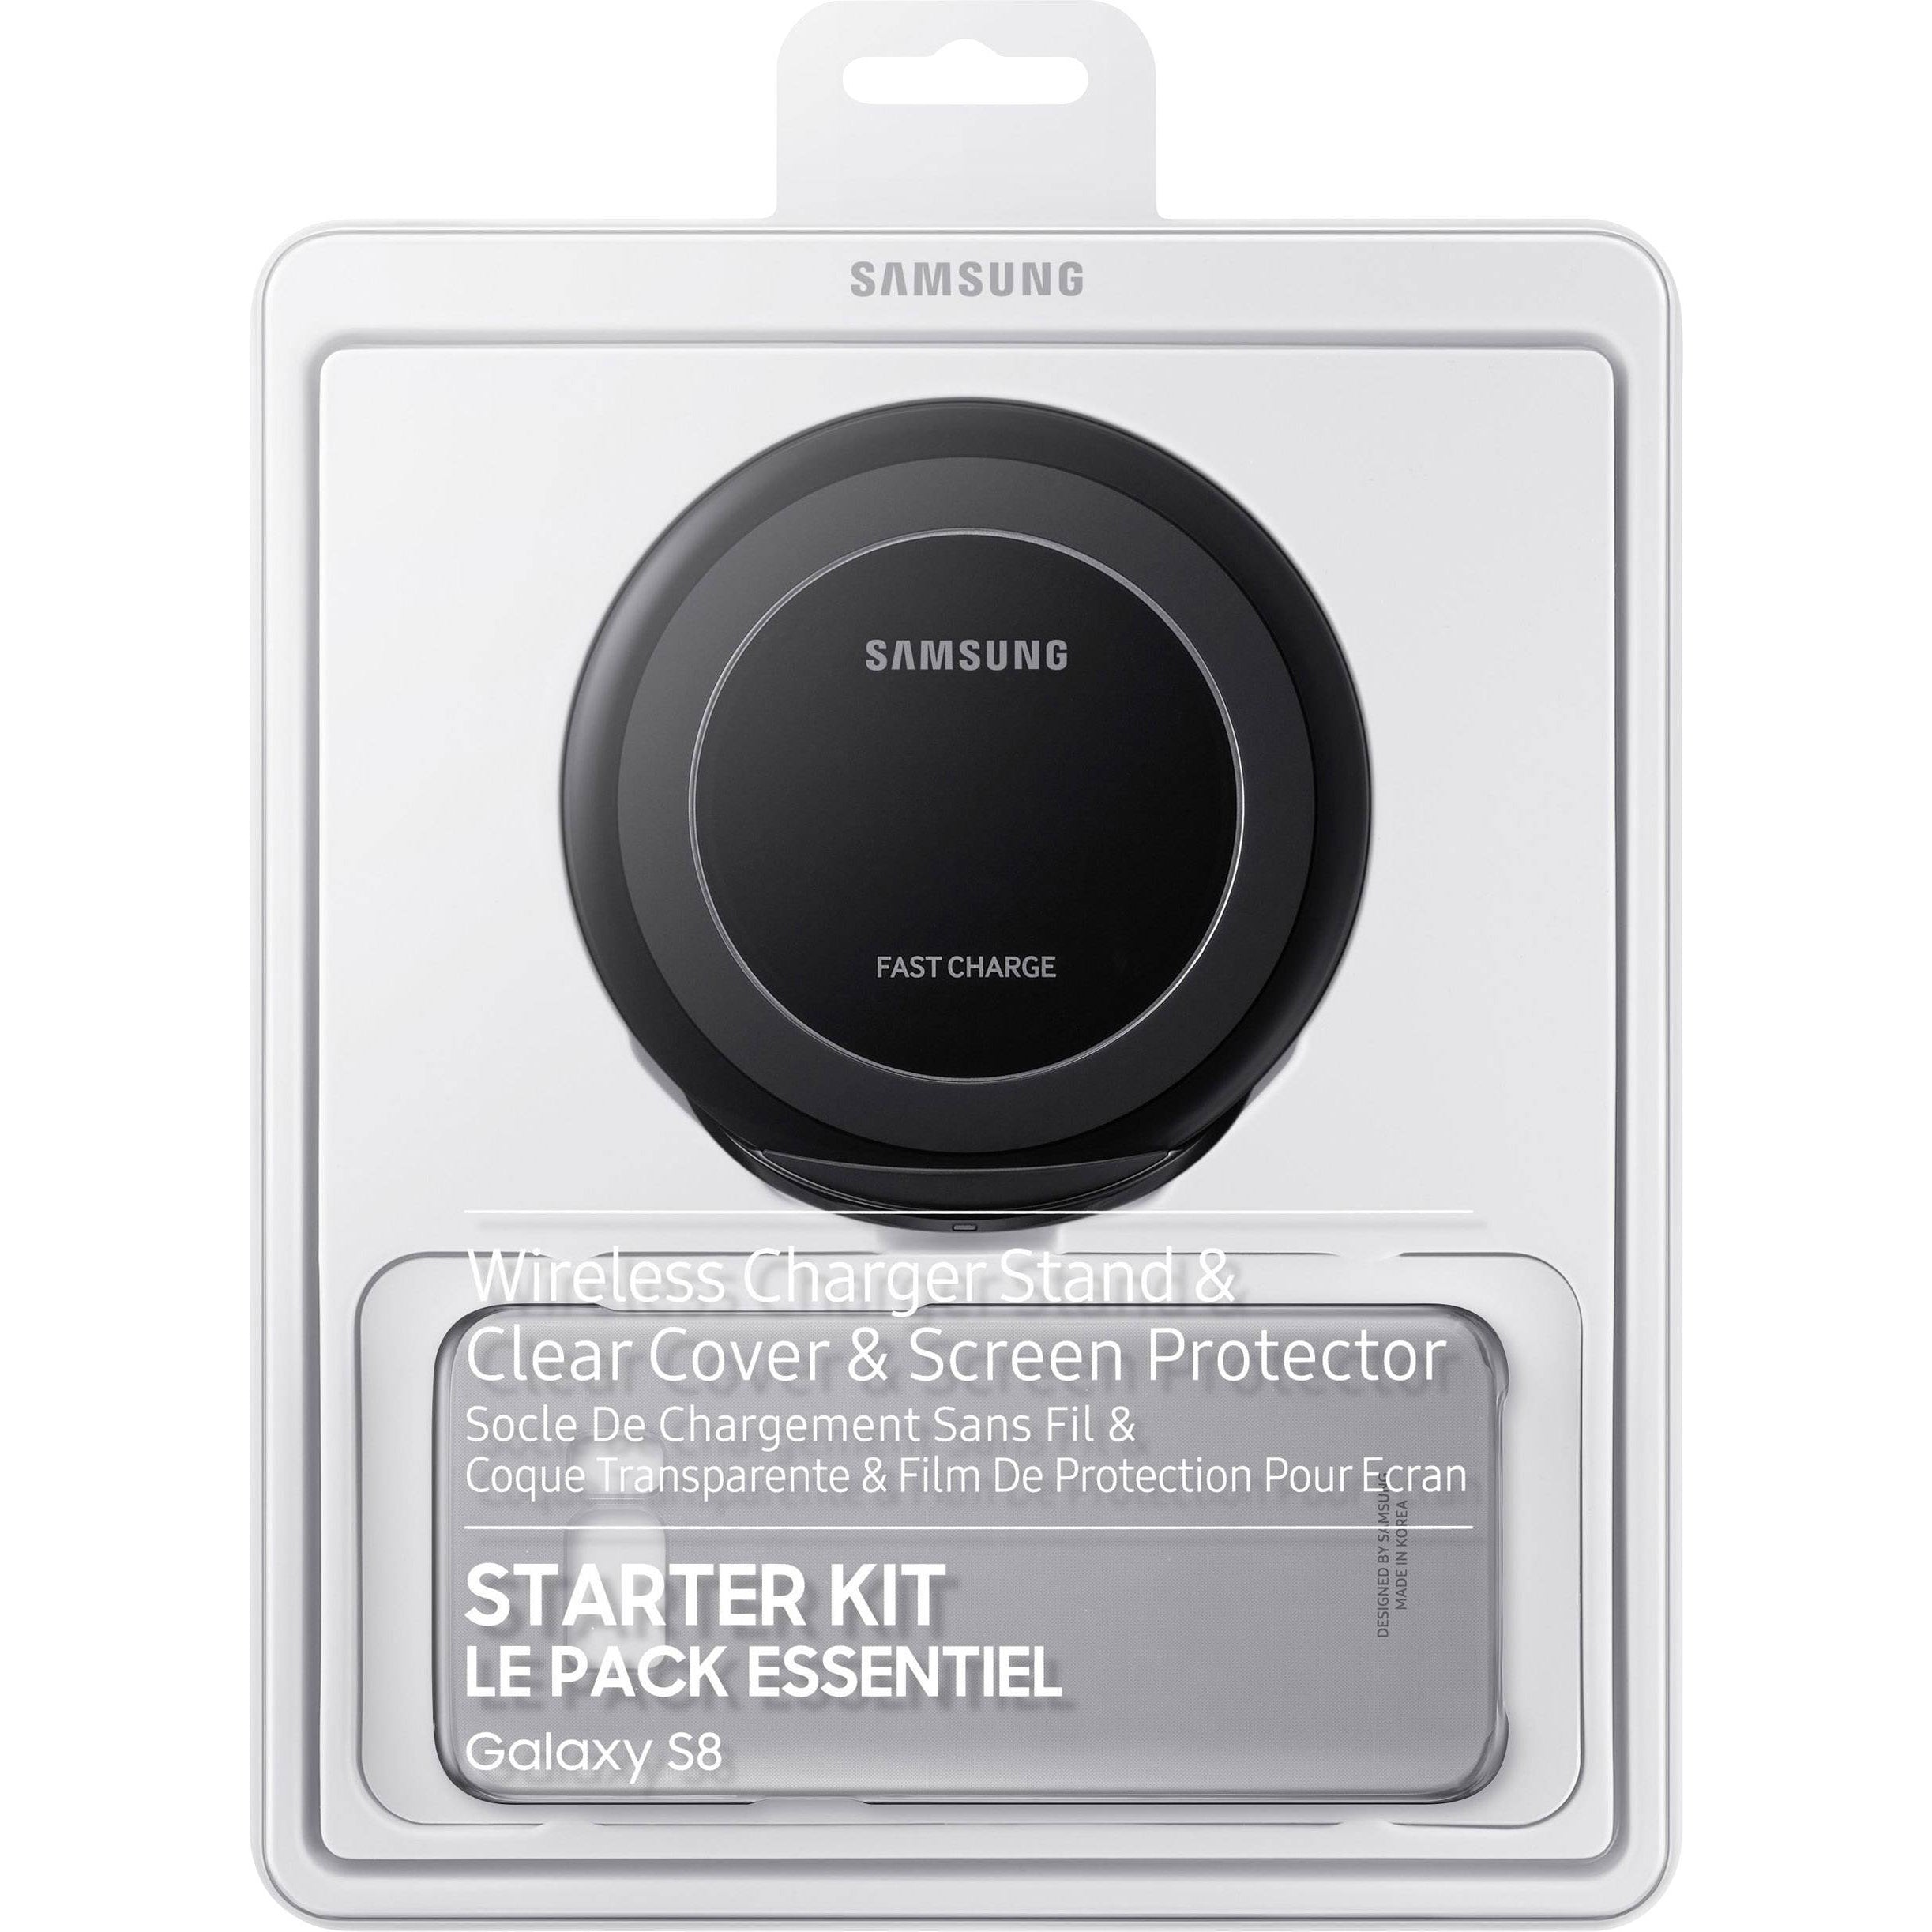 Samsung Starter Kit for Galaxy S8